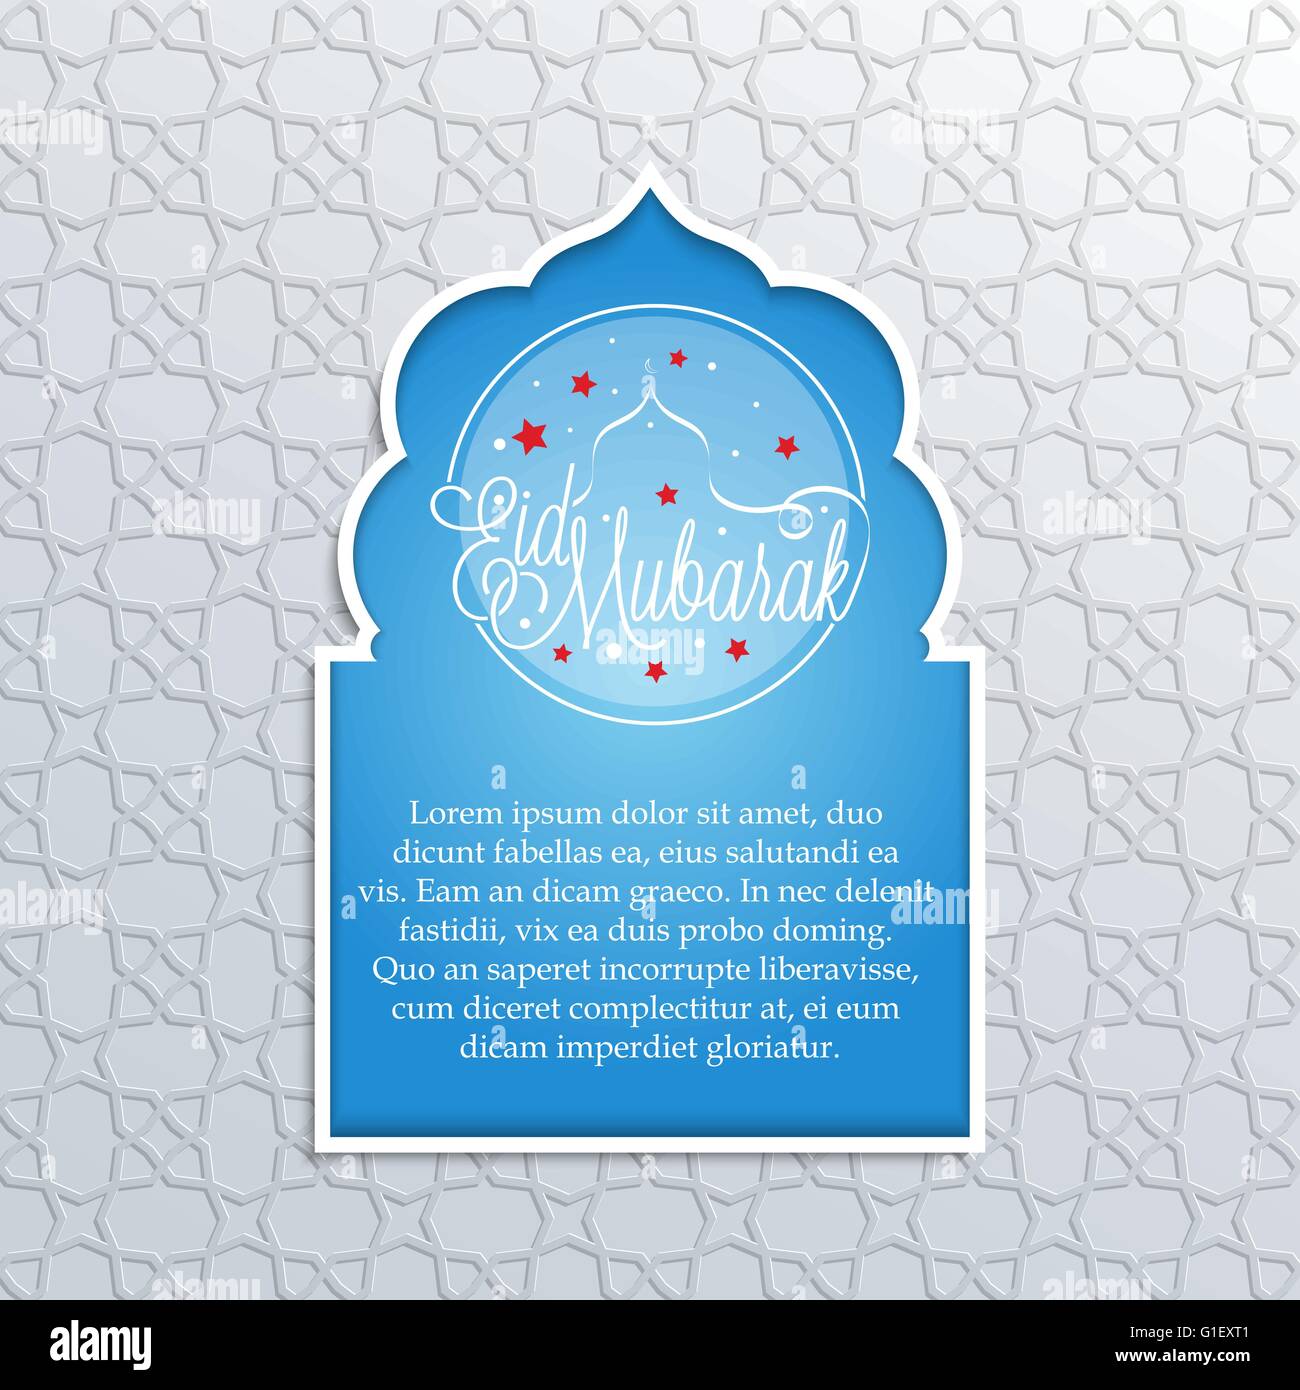 Vector Illustration of Eid Mubarak greeting card design on 